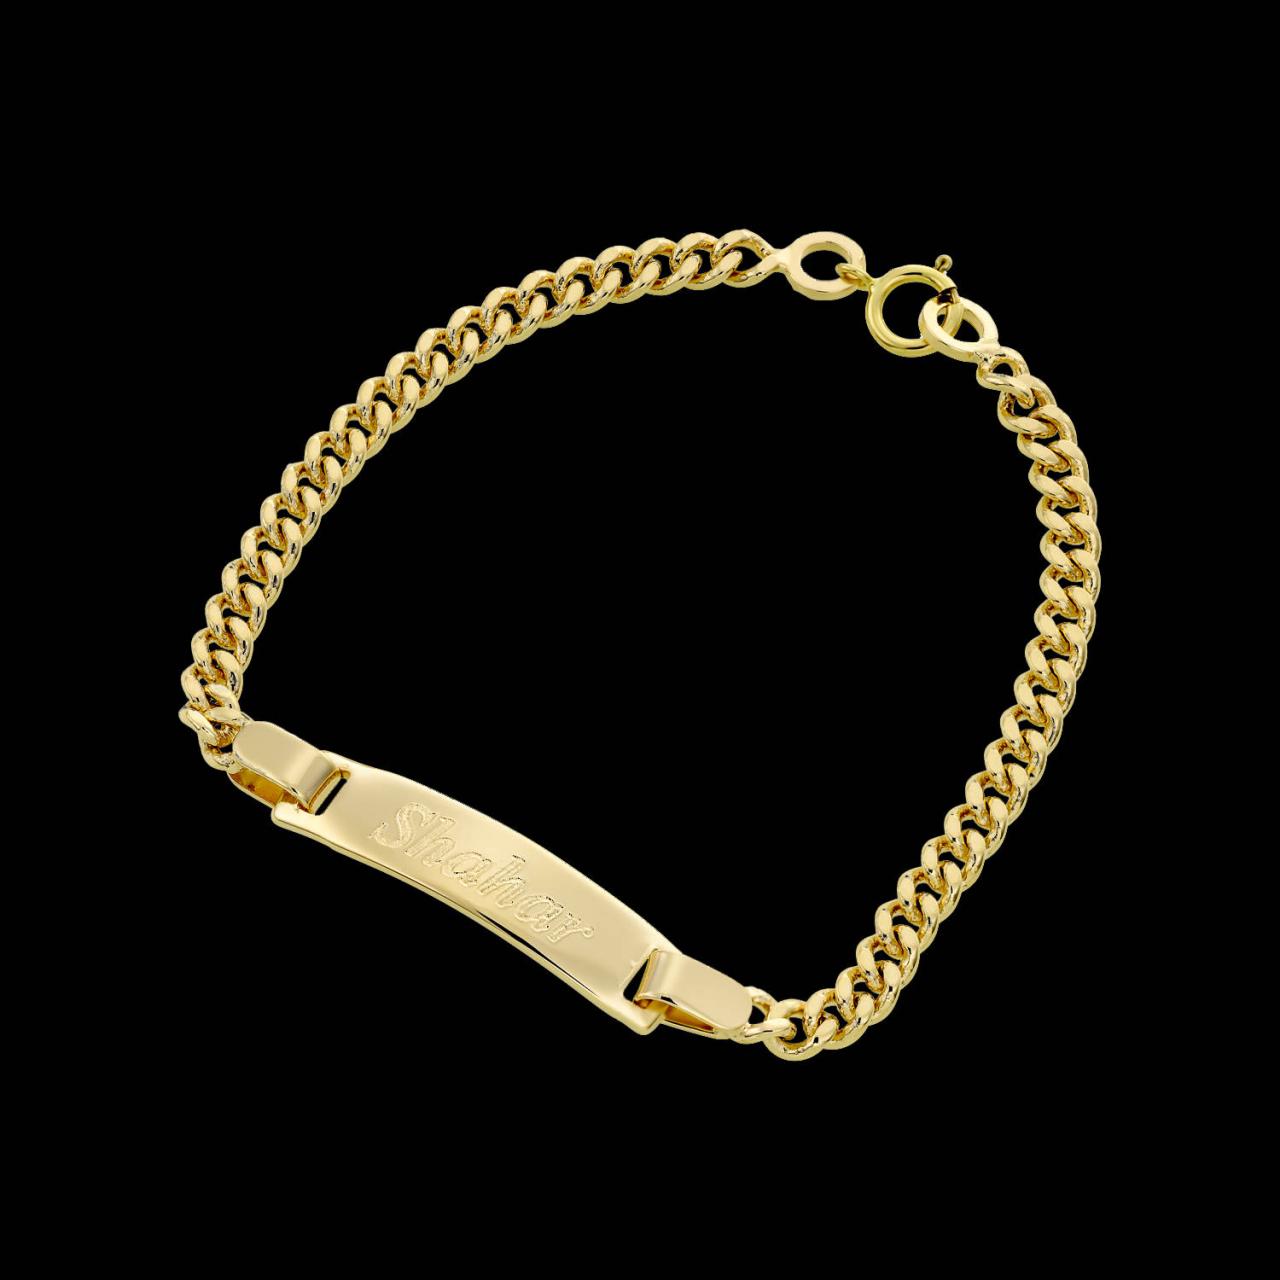 Personalized Bracelet - Custom Bracelet - Engraved Bracelet - Personalized Jewelry - Personalized Gift - Personalized Name Bracelet - Gold Name